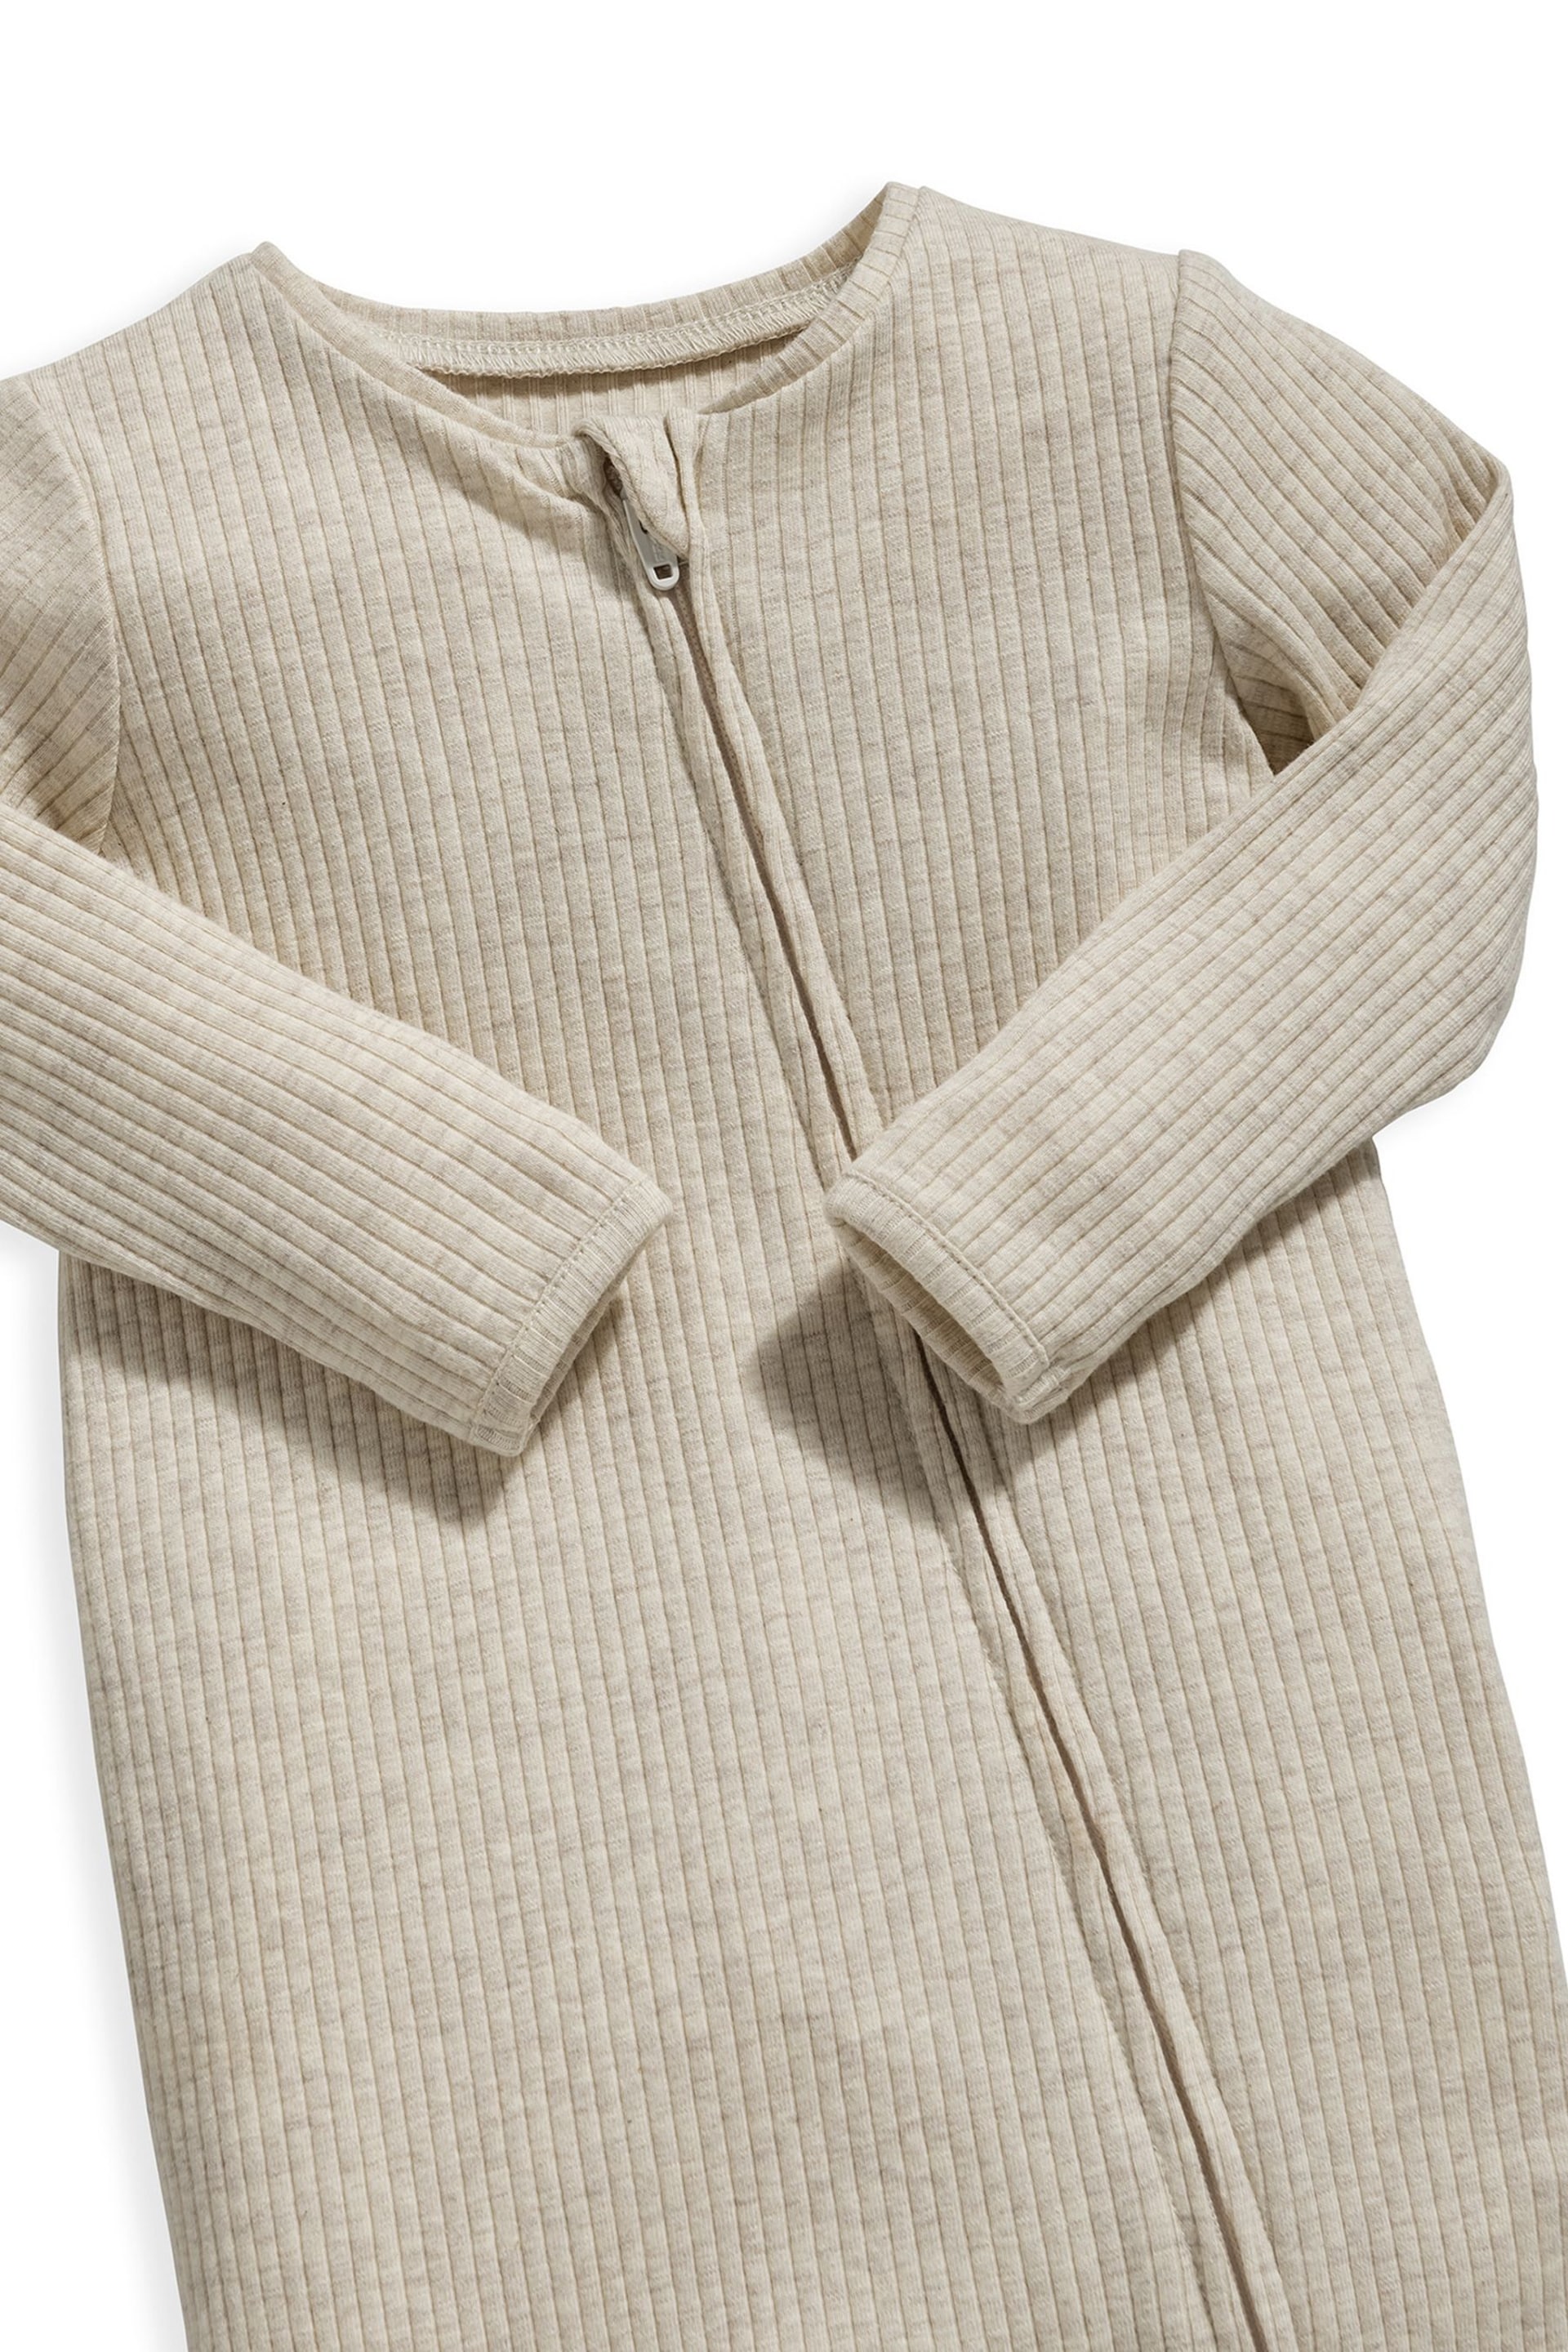 Mamas & Papas Newborn Unisex Brown Basics Oatmeal Zip Sleepsuit - Image 4 of 4